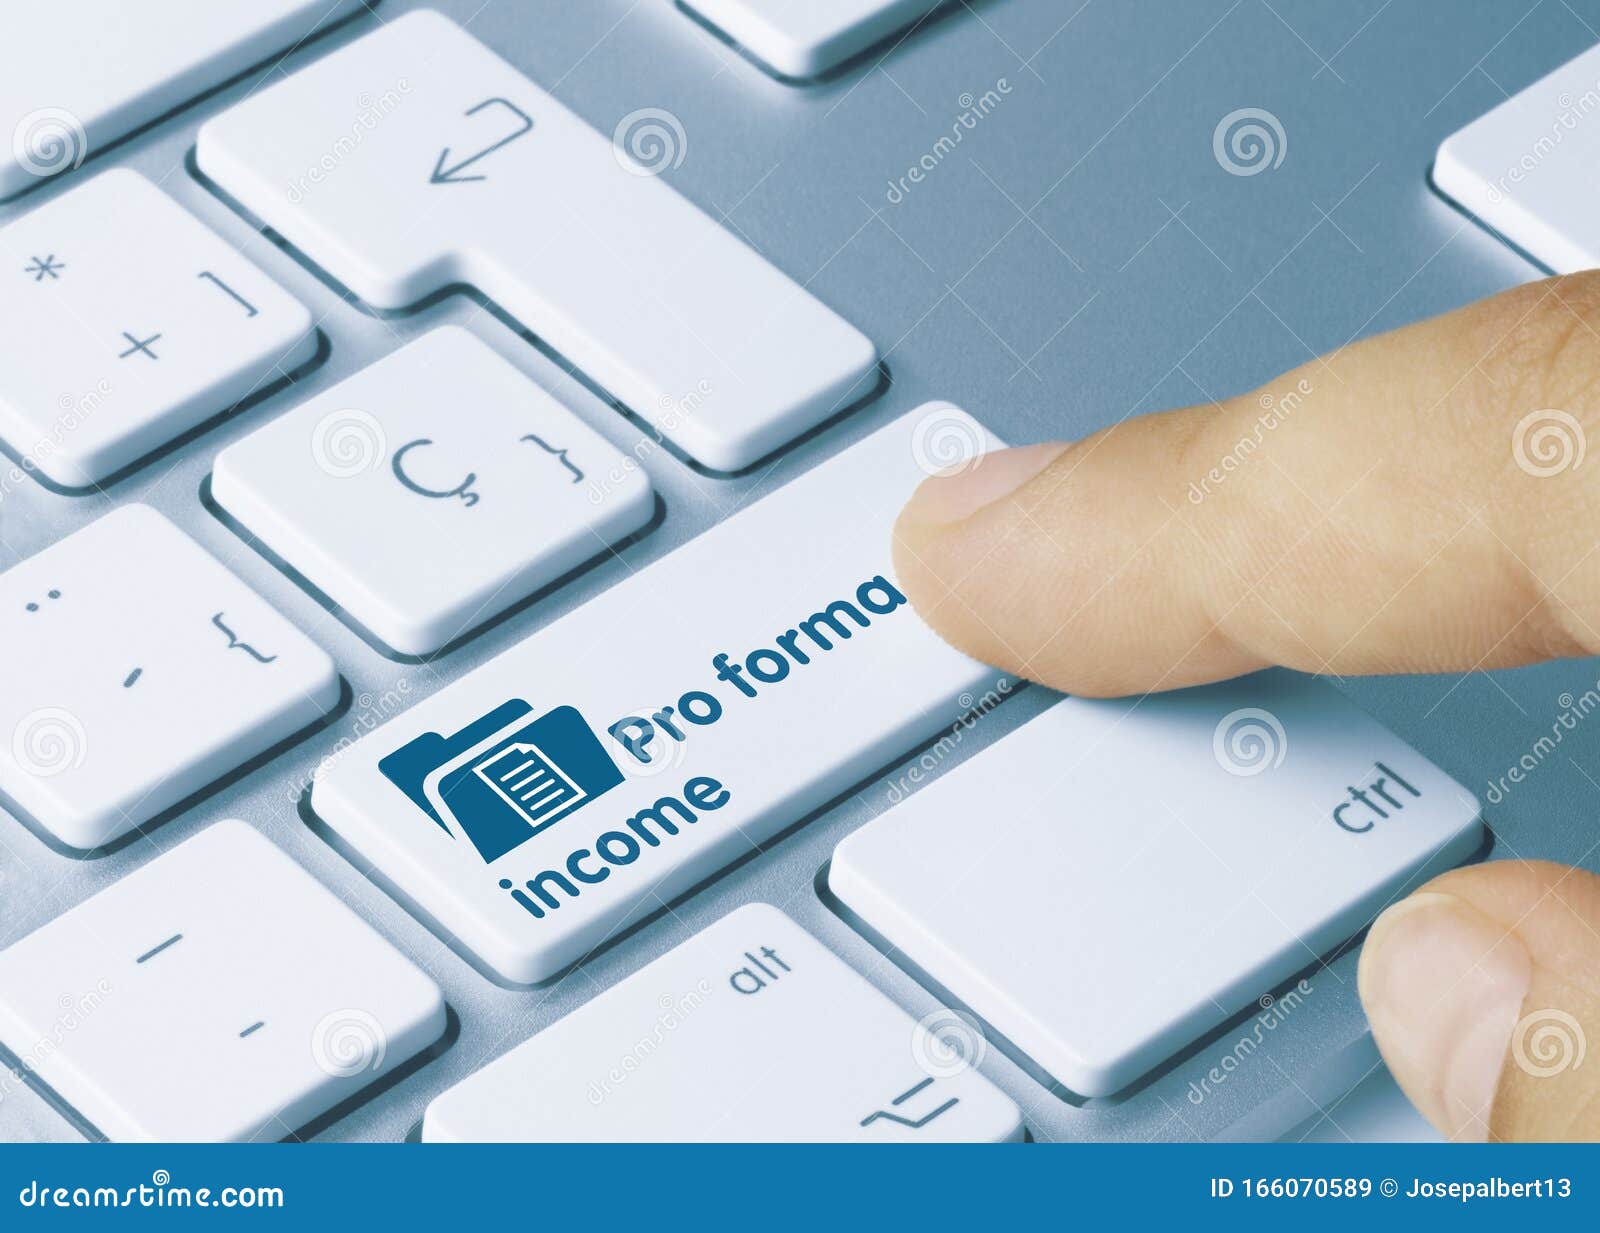 pro forma income - inscription on blue keyboard key